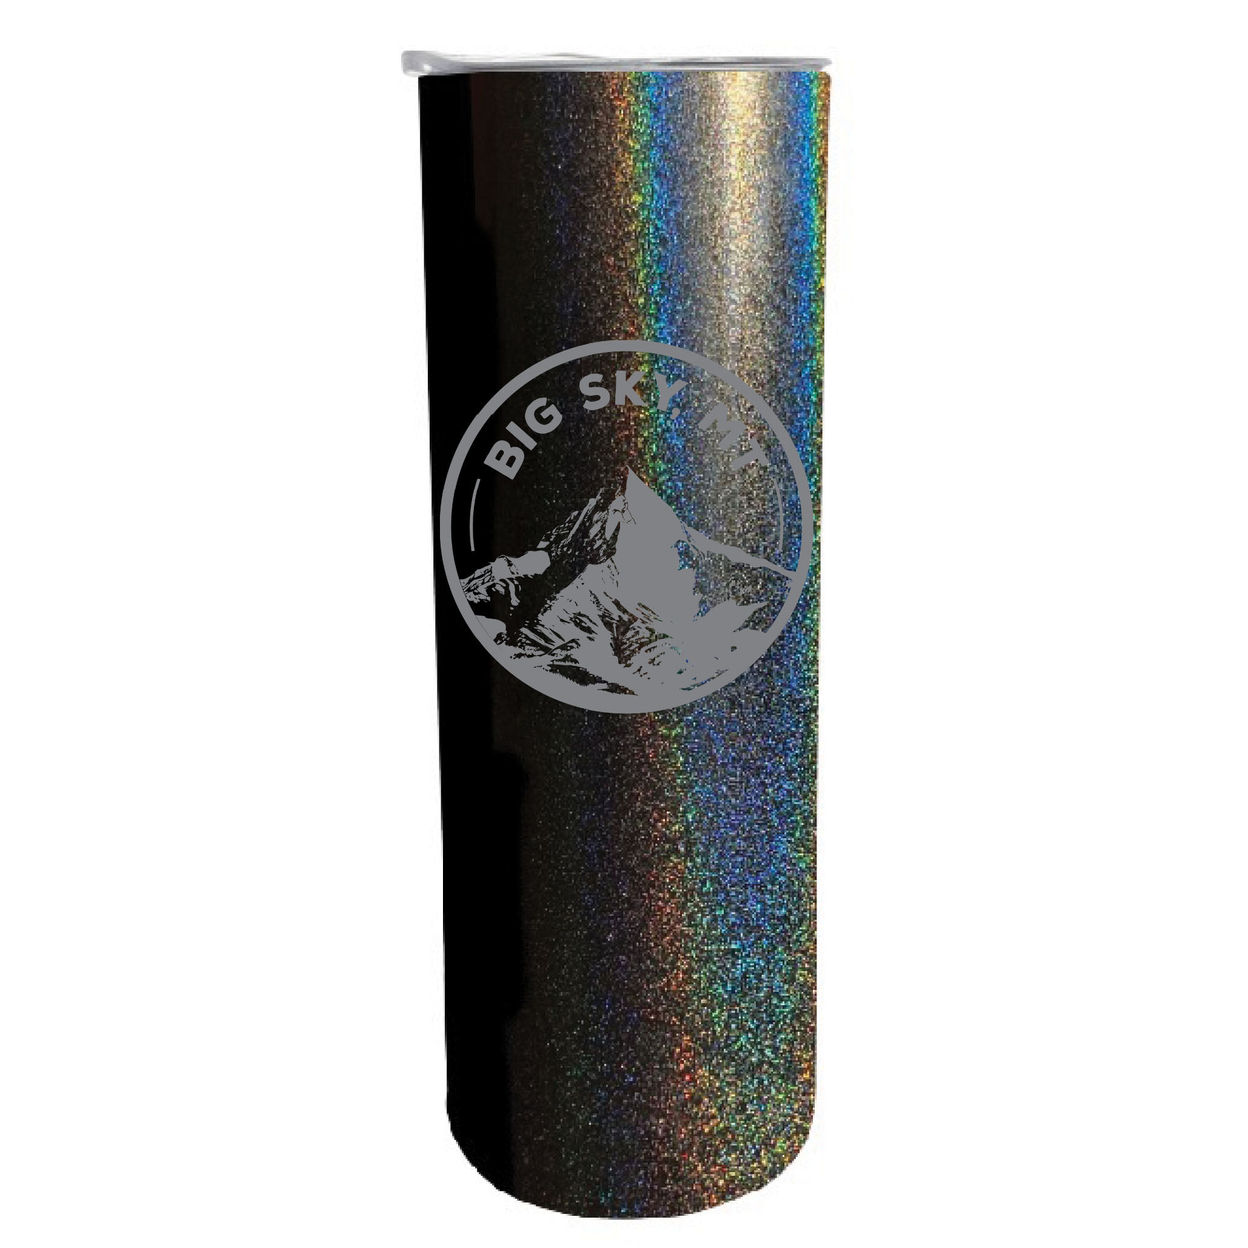 Big Sky Montana Souvenir 20 Oz Engraved Insulated Stainless Steel Skinny Tumbler - Black Glitter,,Single Unit